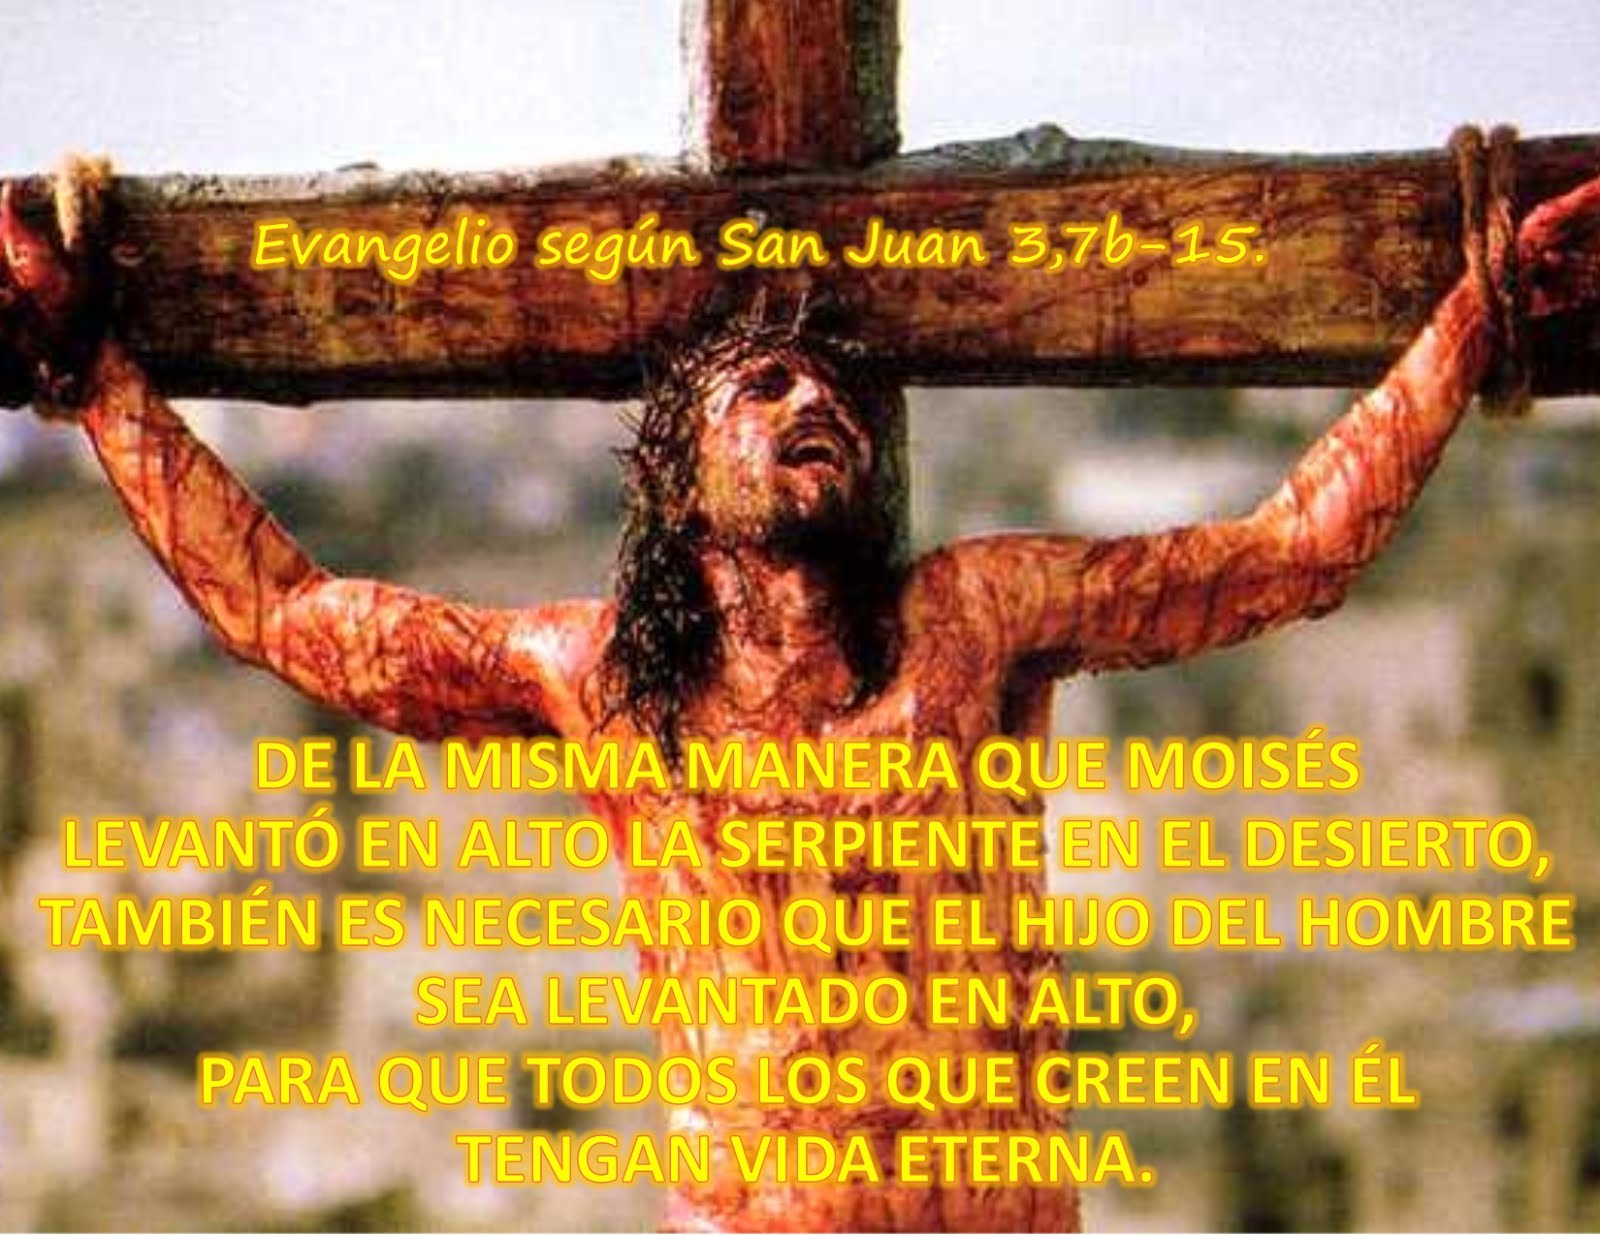 Evangelio según San Juan 3,7b-15.